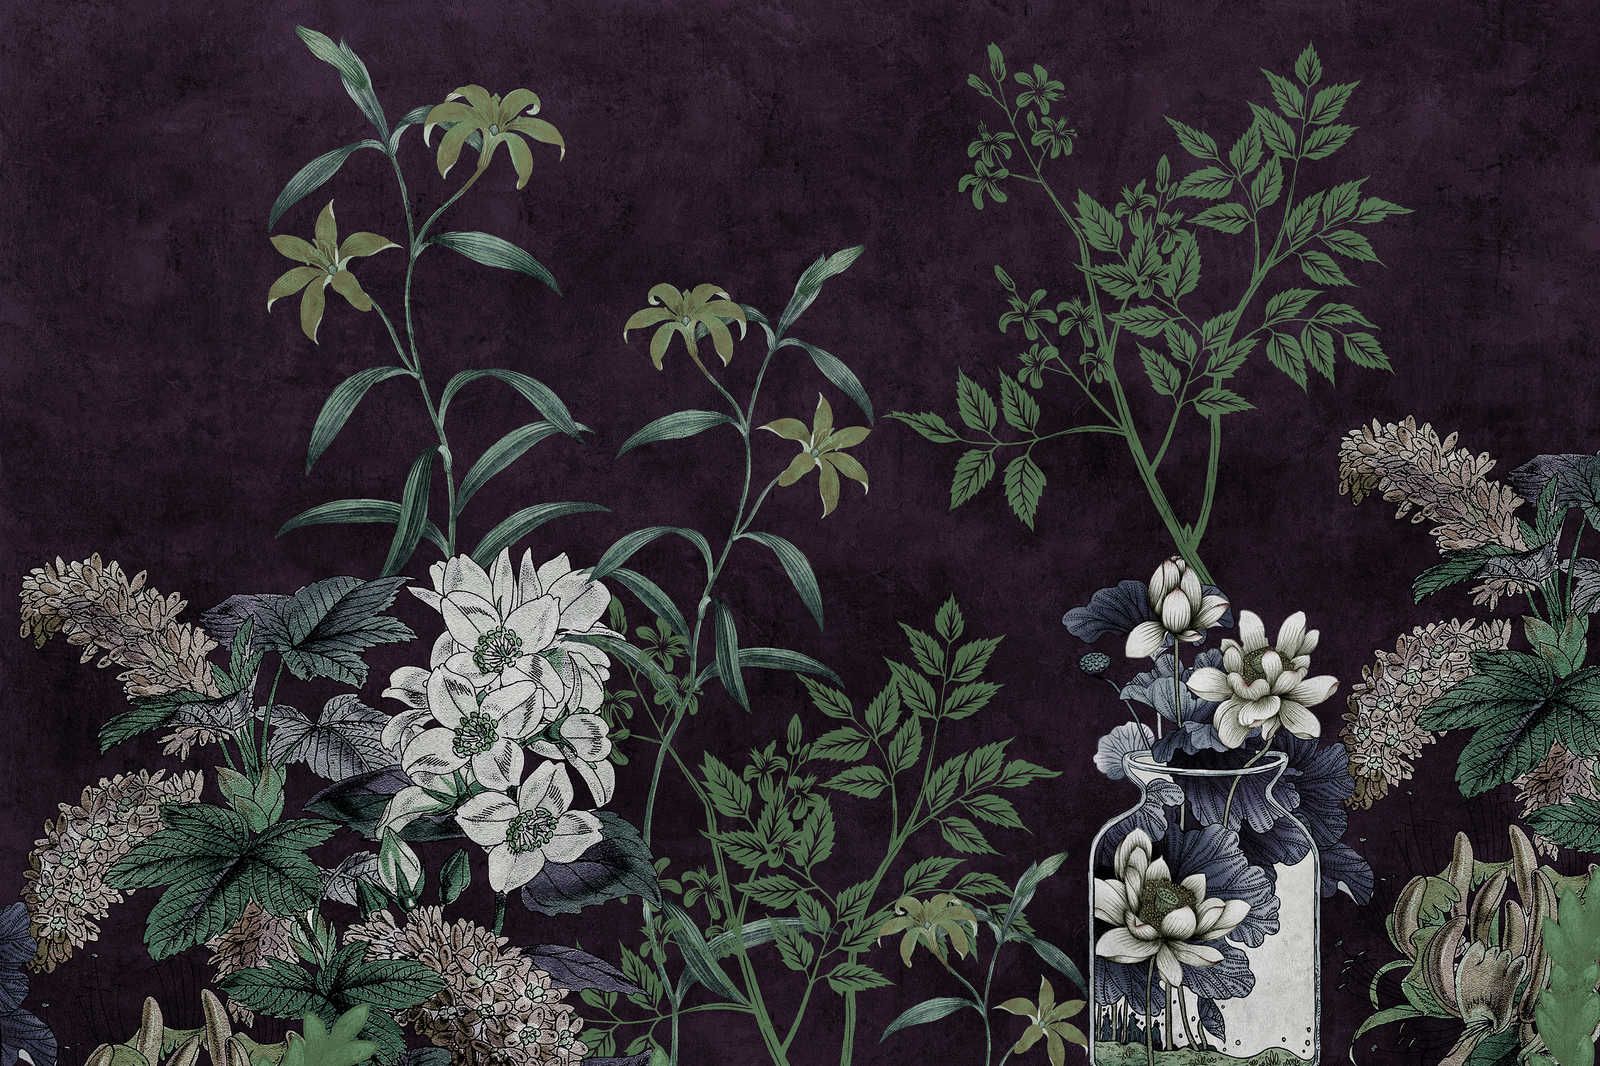             Dark Room 1 - Schwarzes Leinwandbild Botanical Muster Grün – 0,90 m x 0,60 m
        